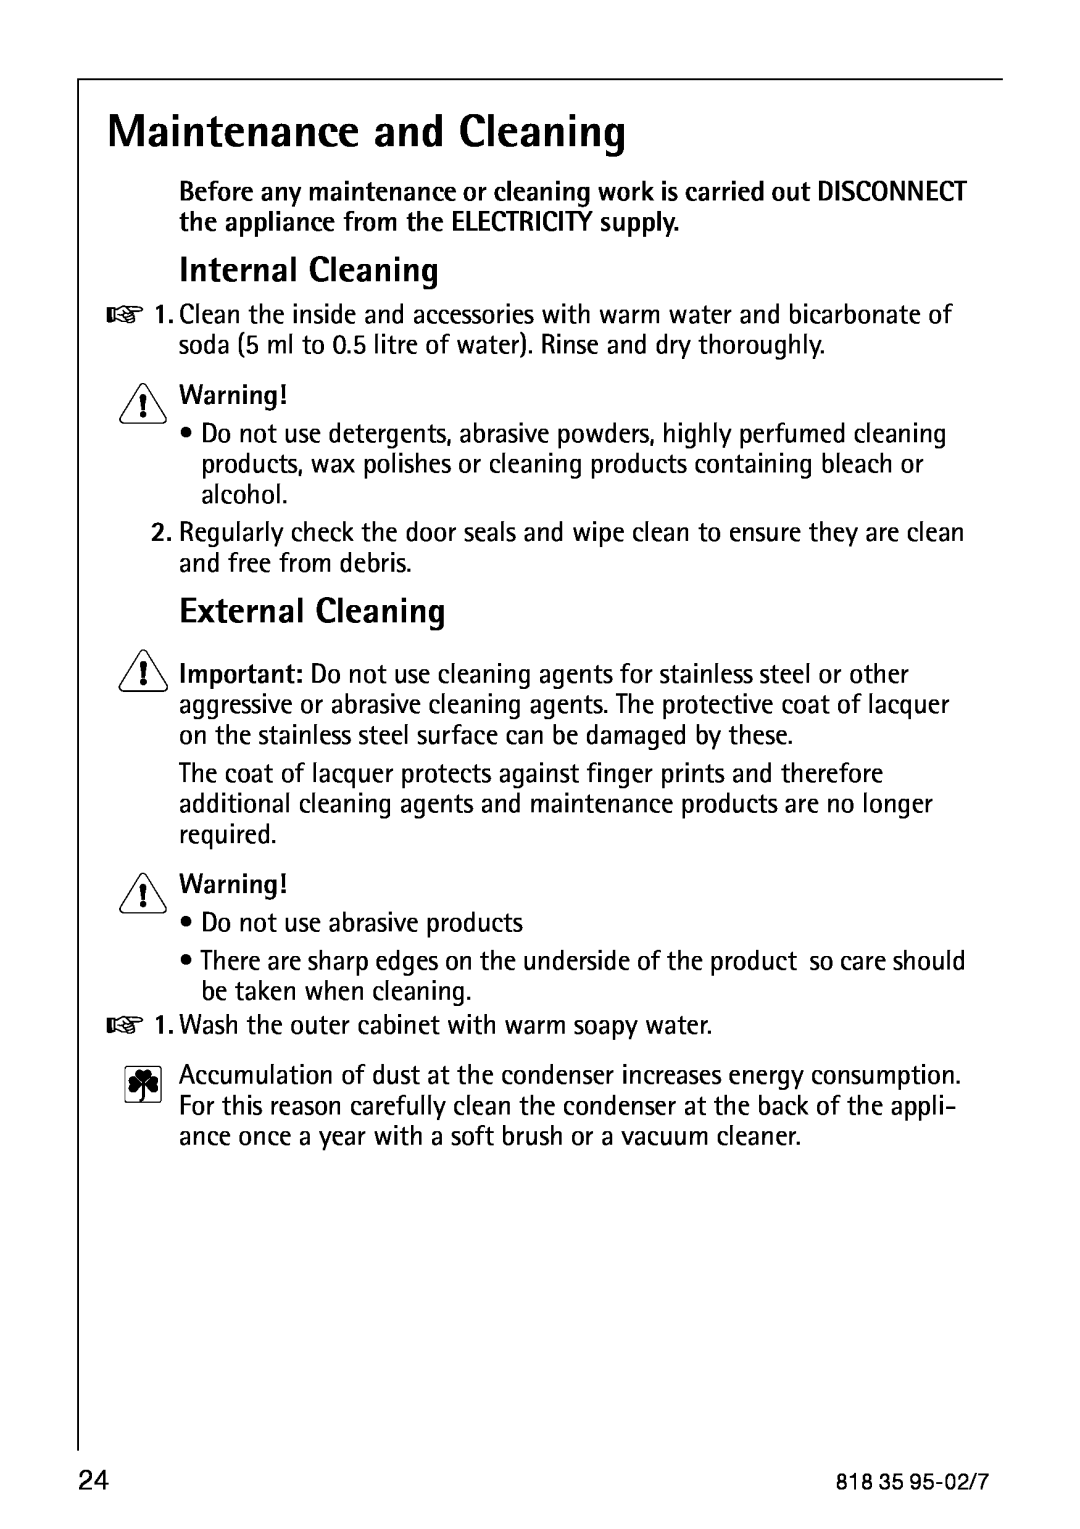 AEG 75248 GA3 manual Maintenance and Cleaning, Internal Cleaning, External Cleaning 